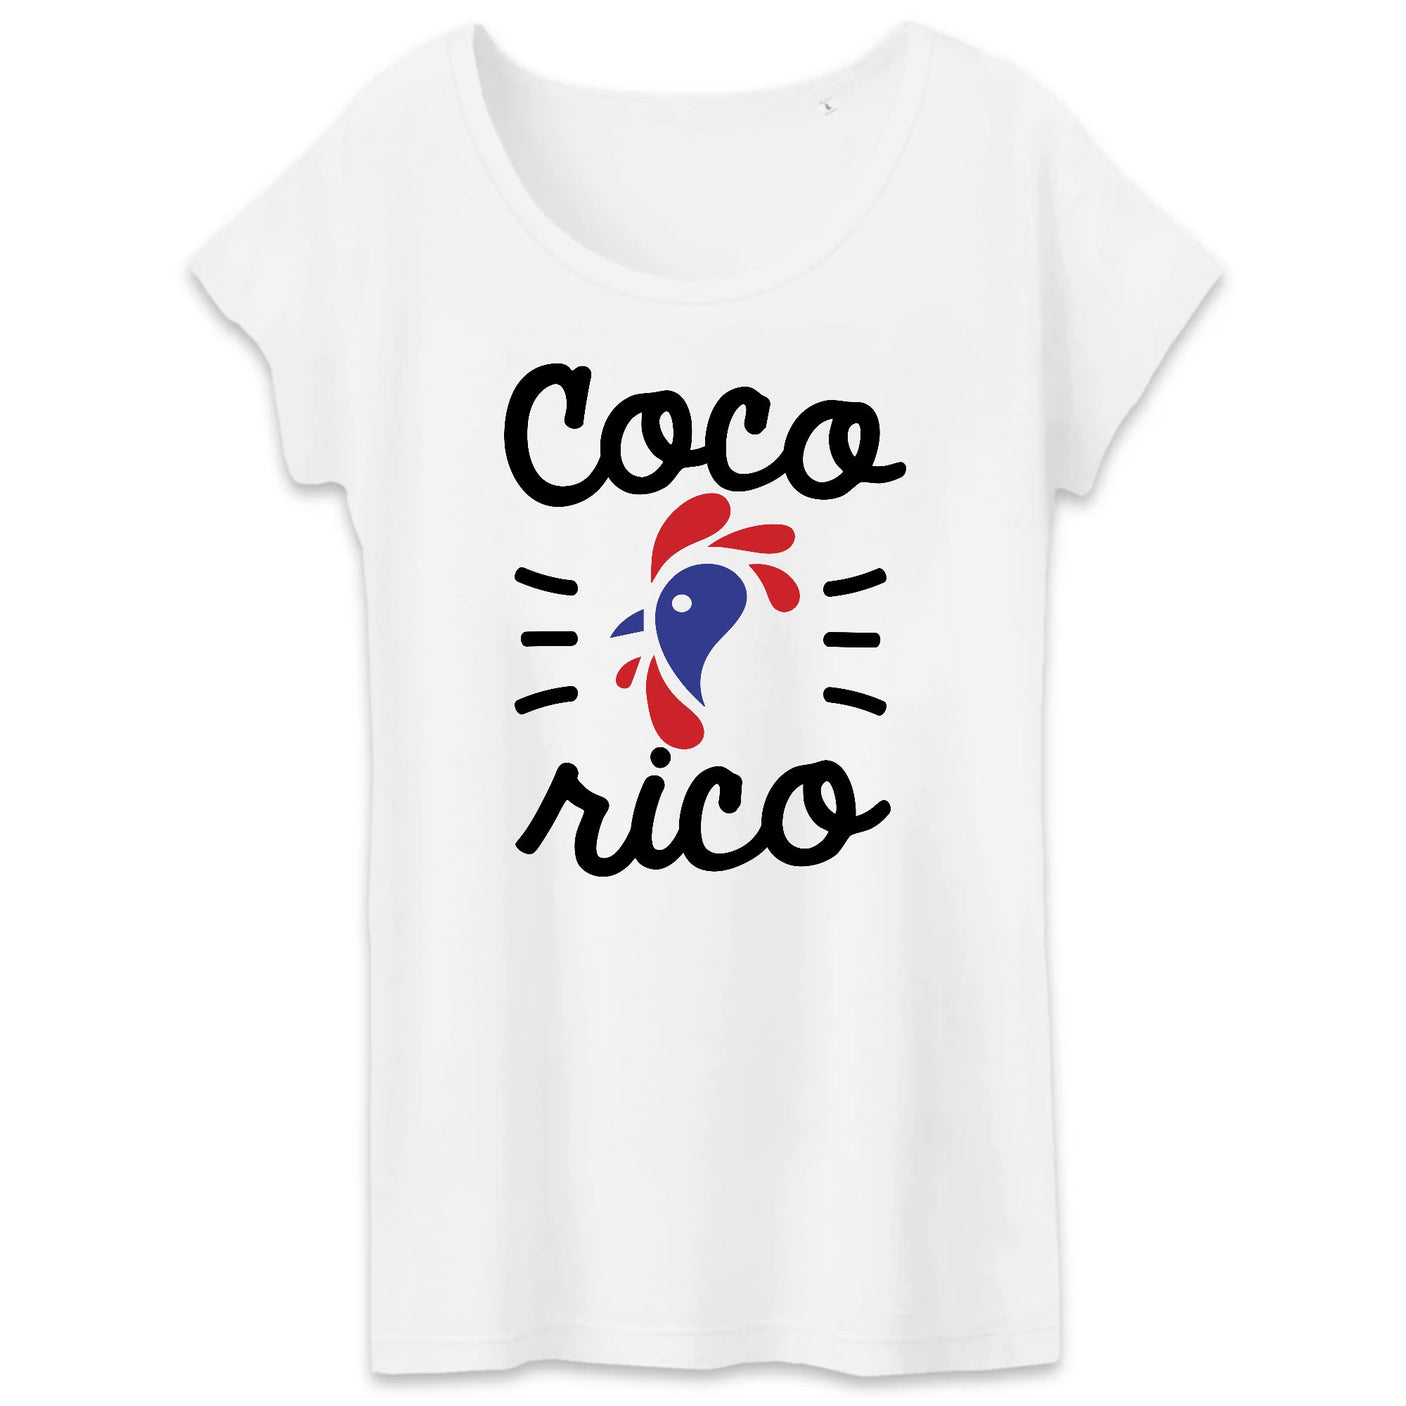 T-shirt femme col V L'original Blanc - Made in France - Cocorico